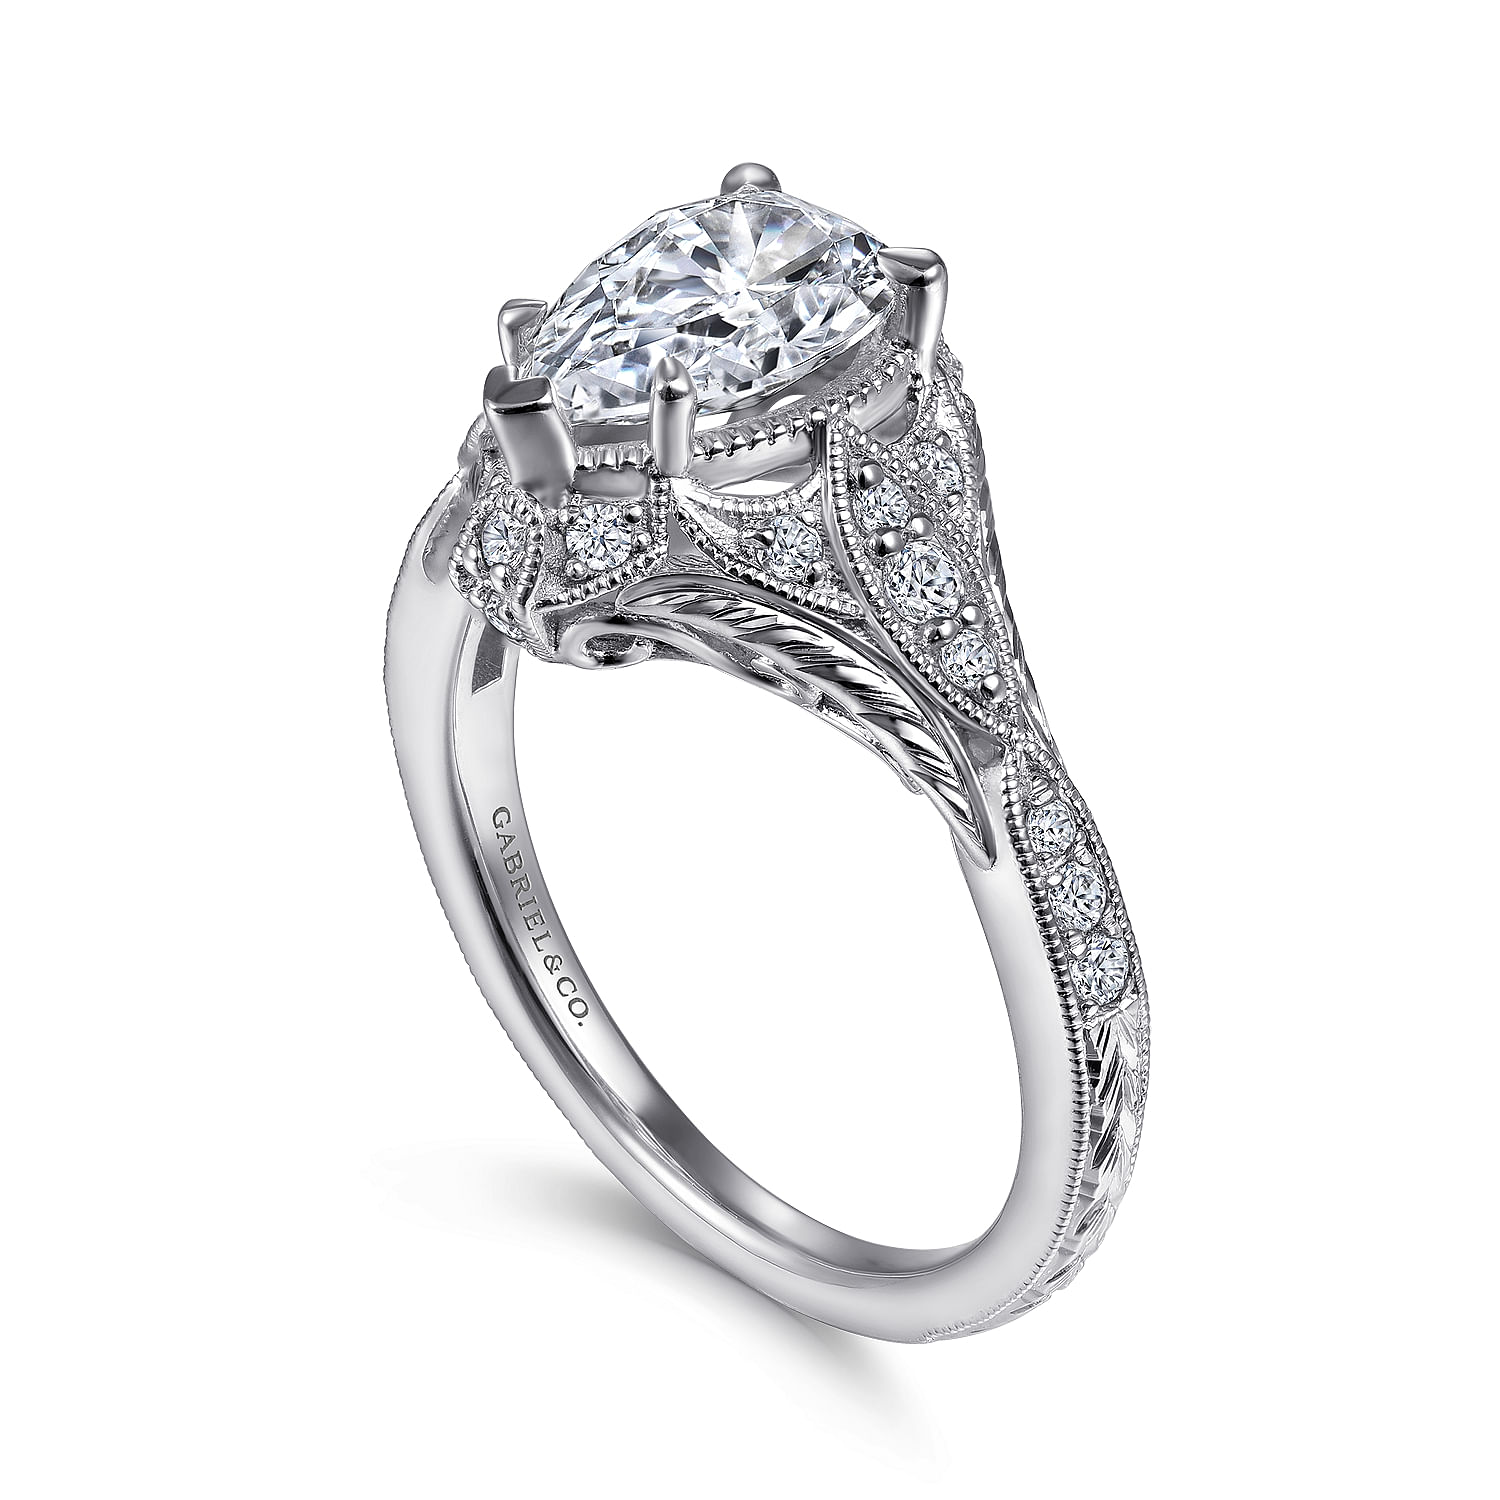 Unique 14K White Gold Vintage Inspired Pear Shape Diamond Halo Engagement Ring